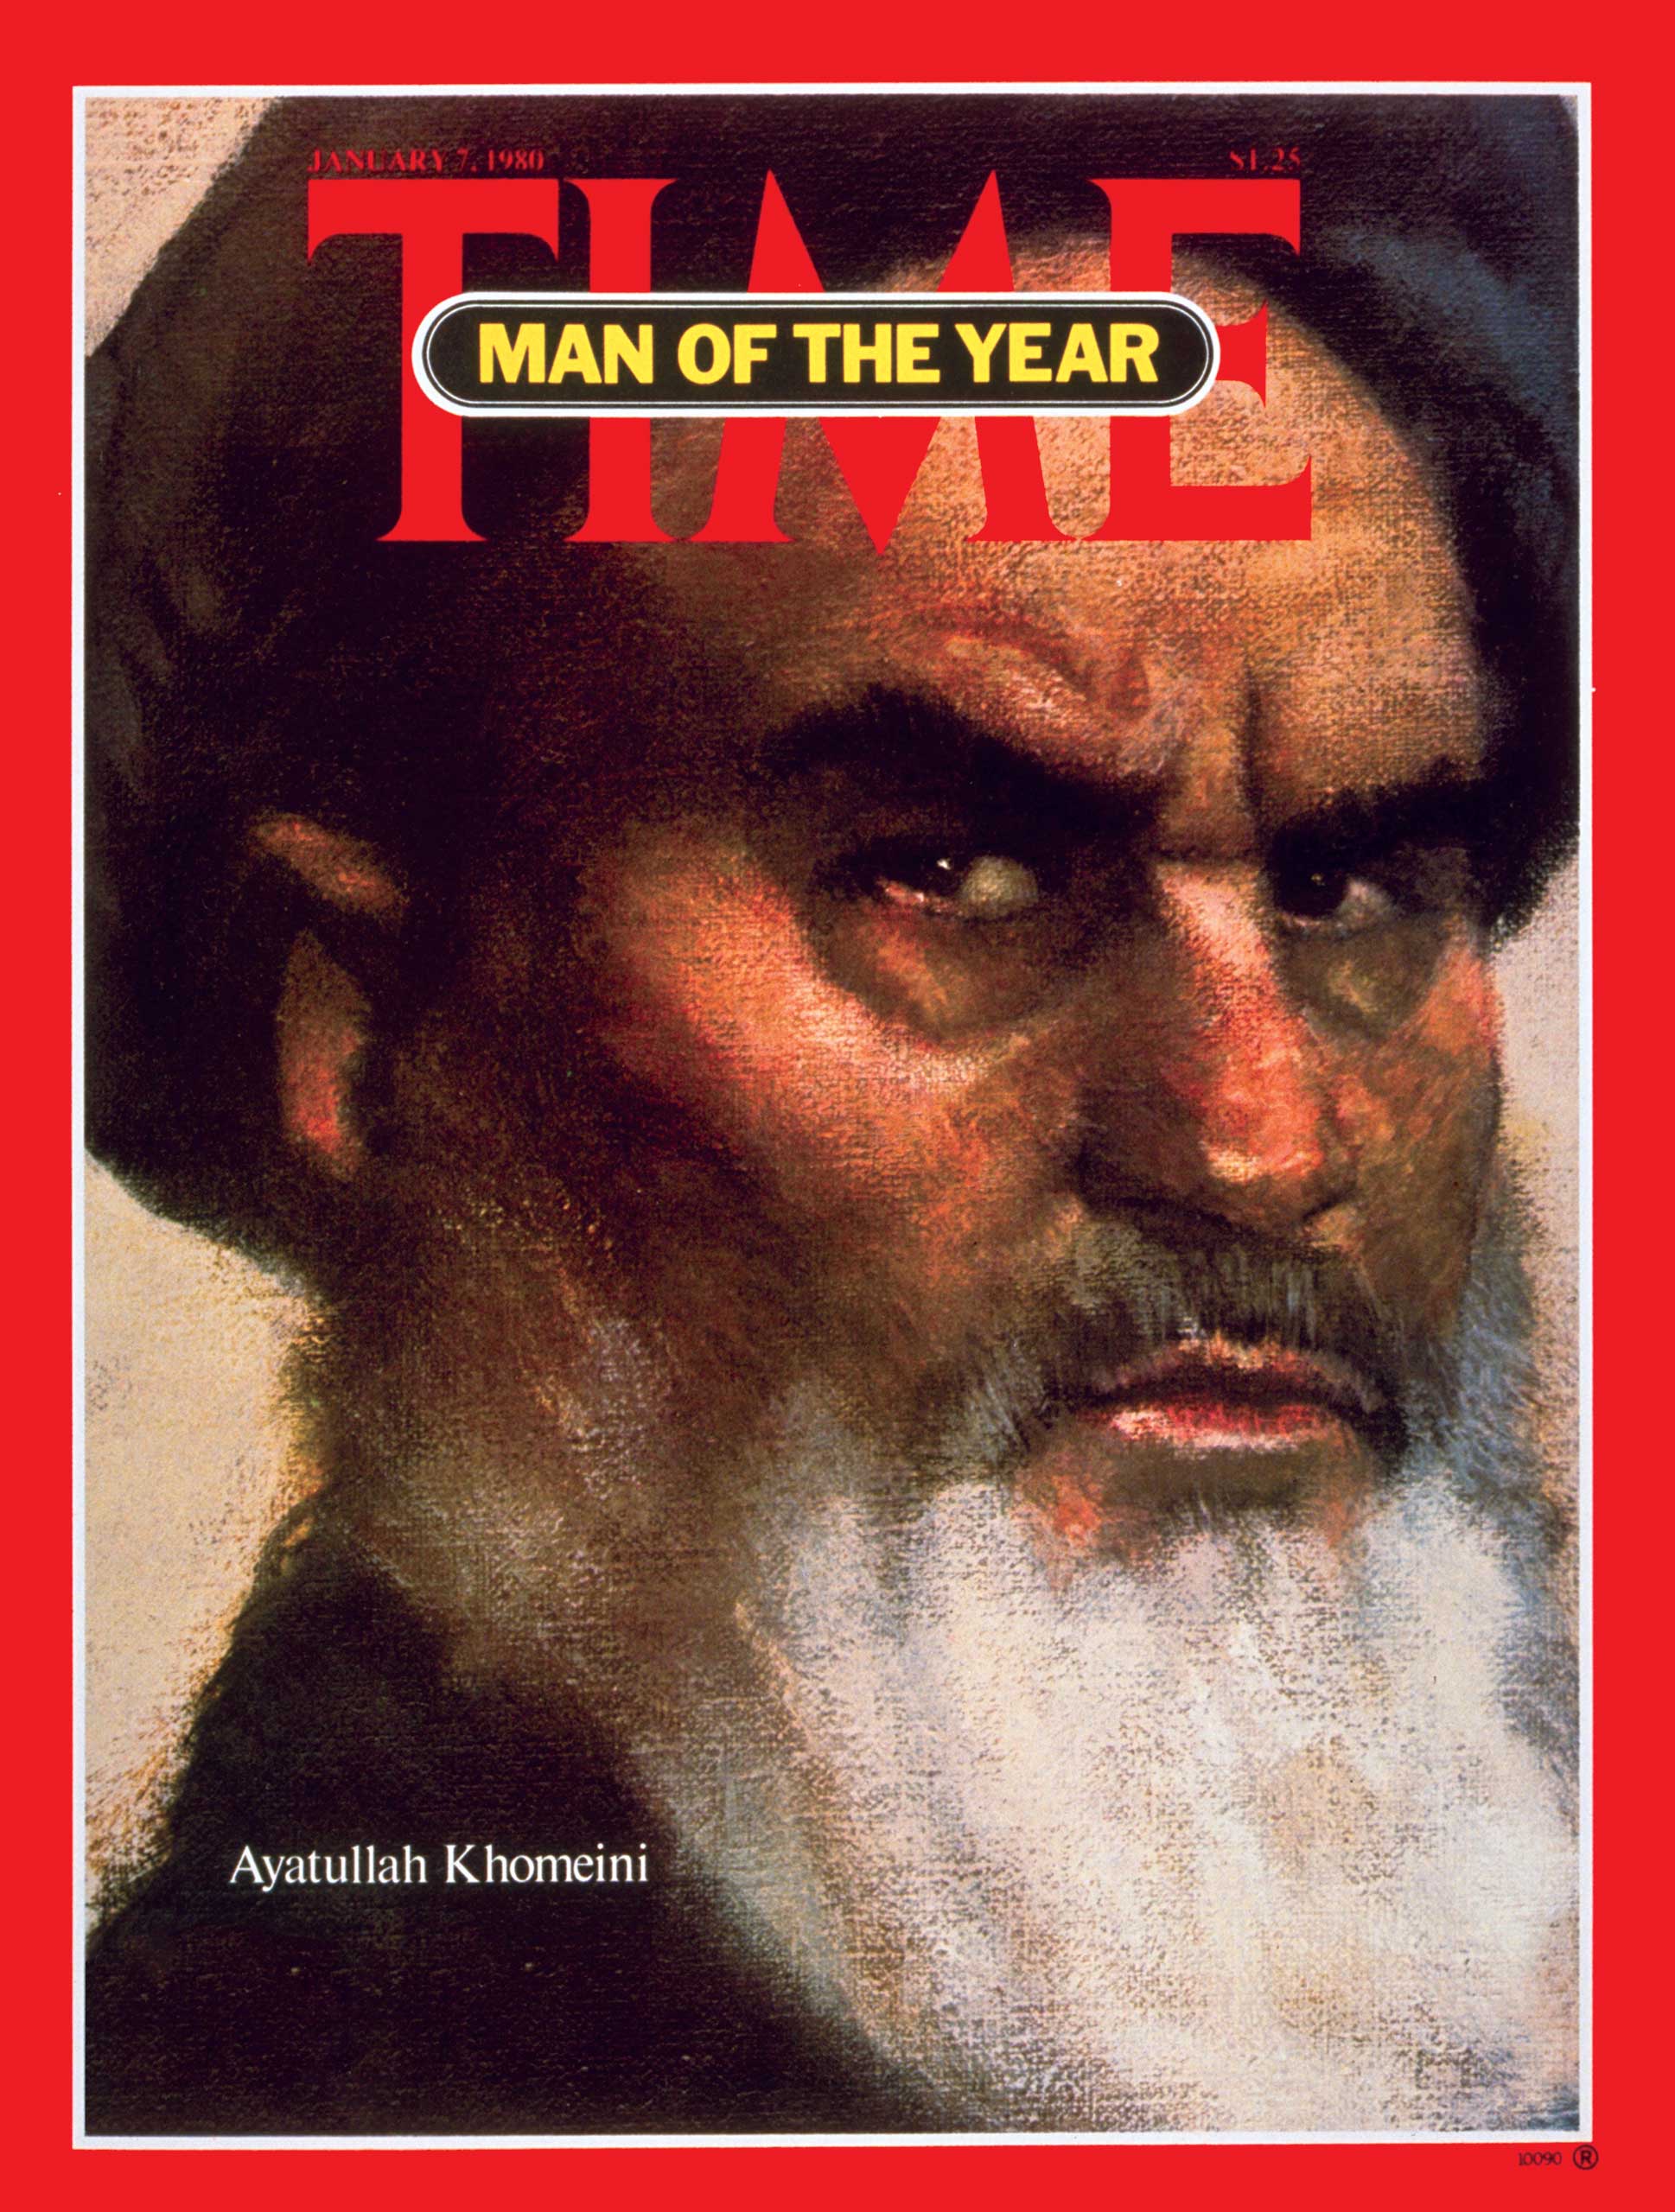 1979: Ayatollah Khomeini